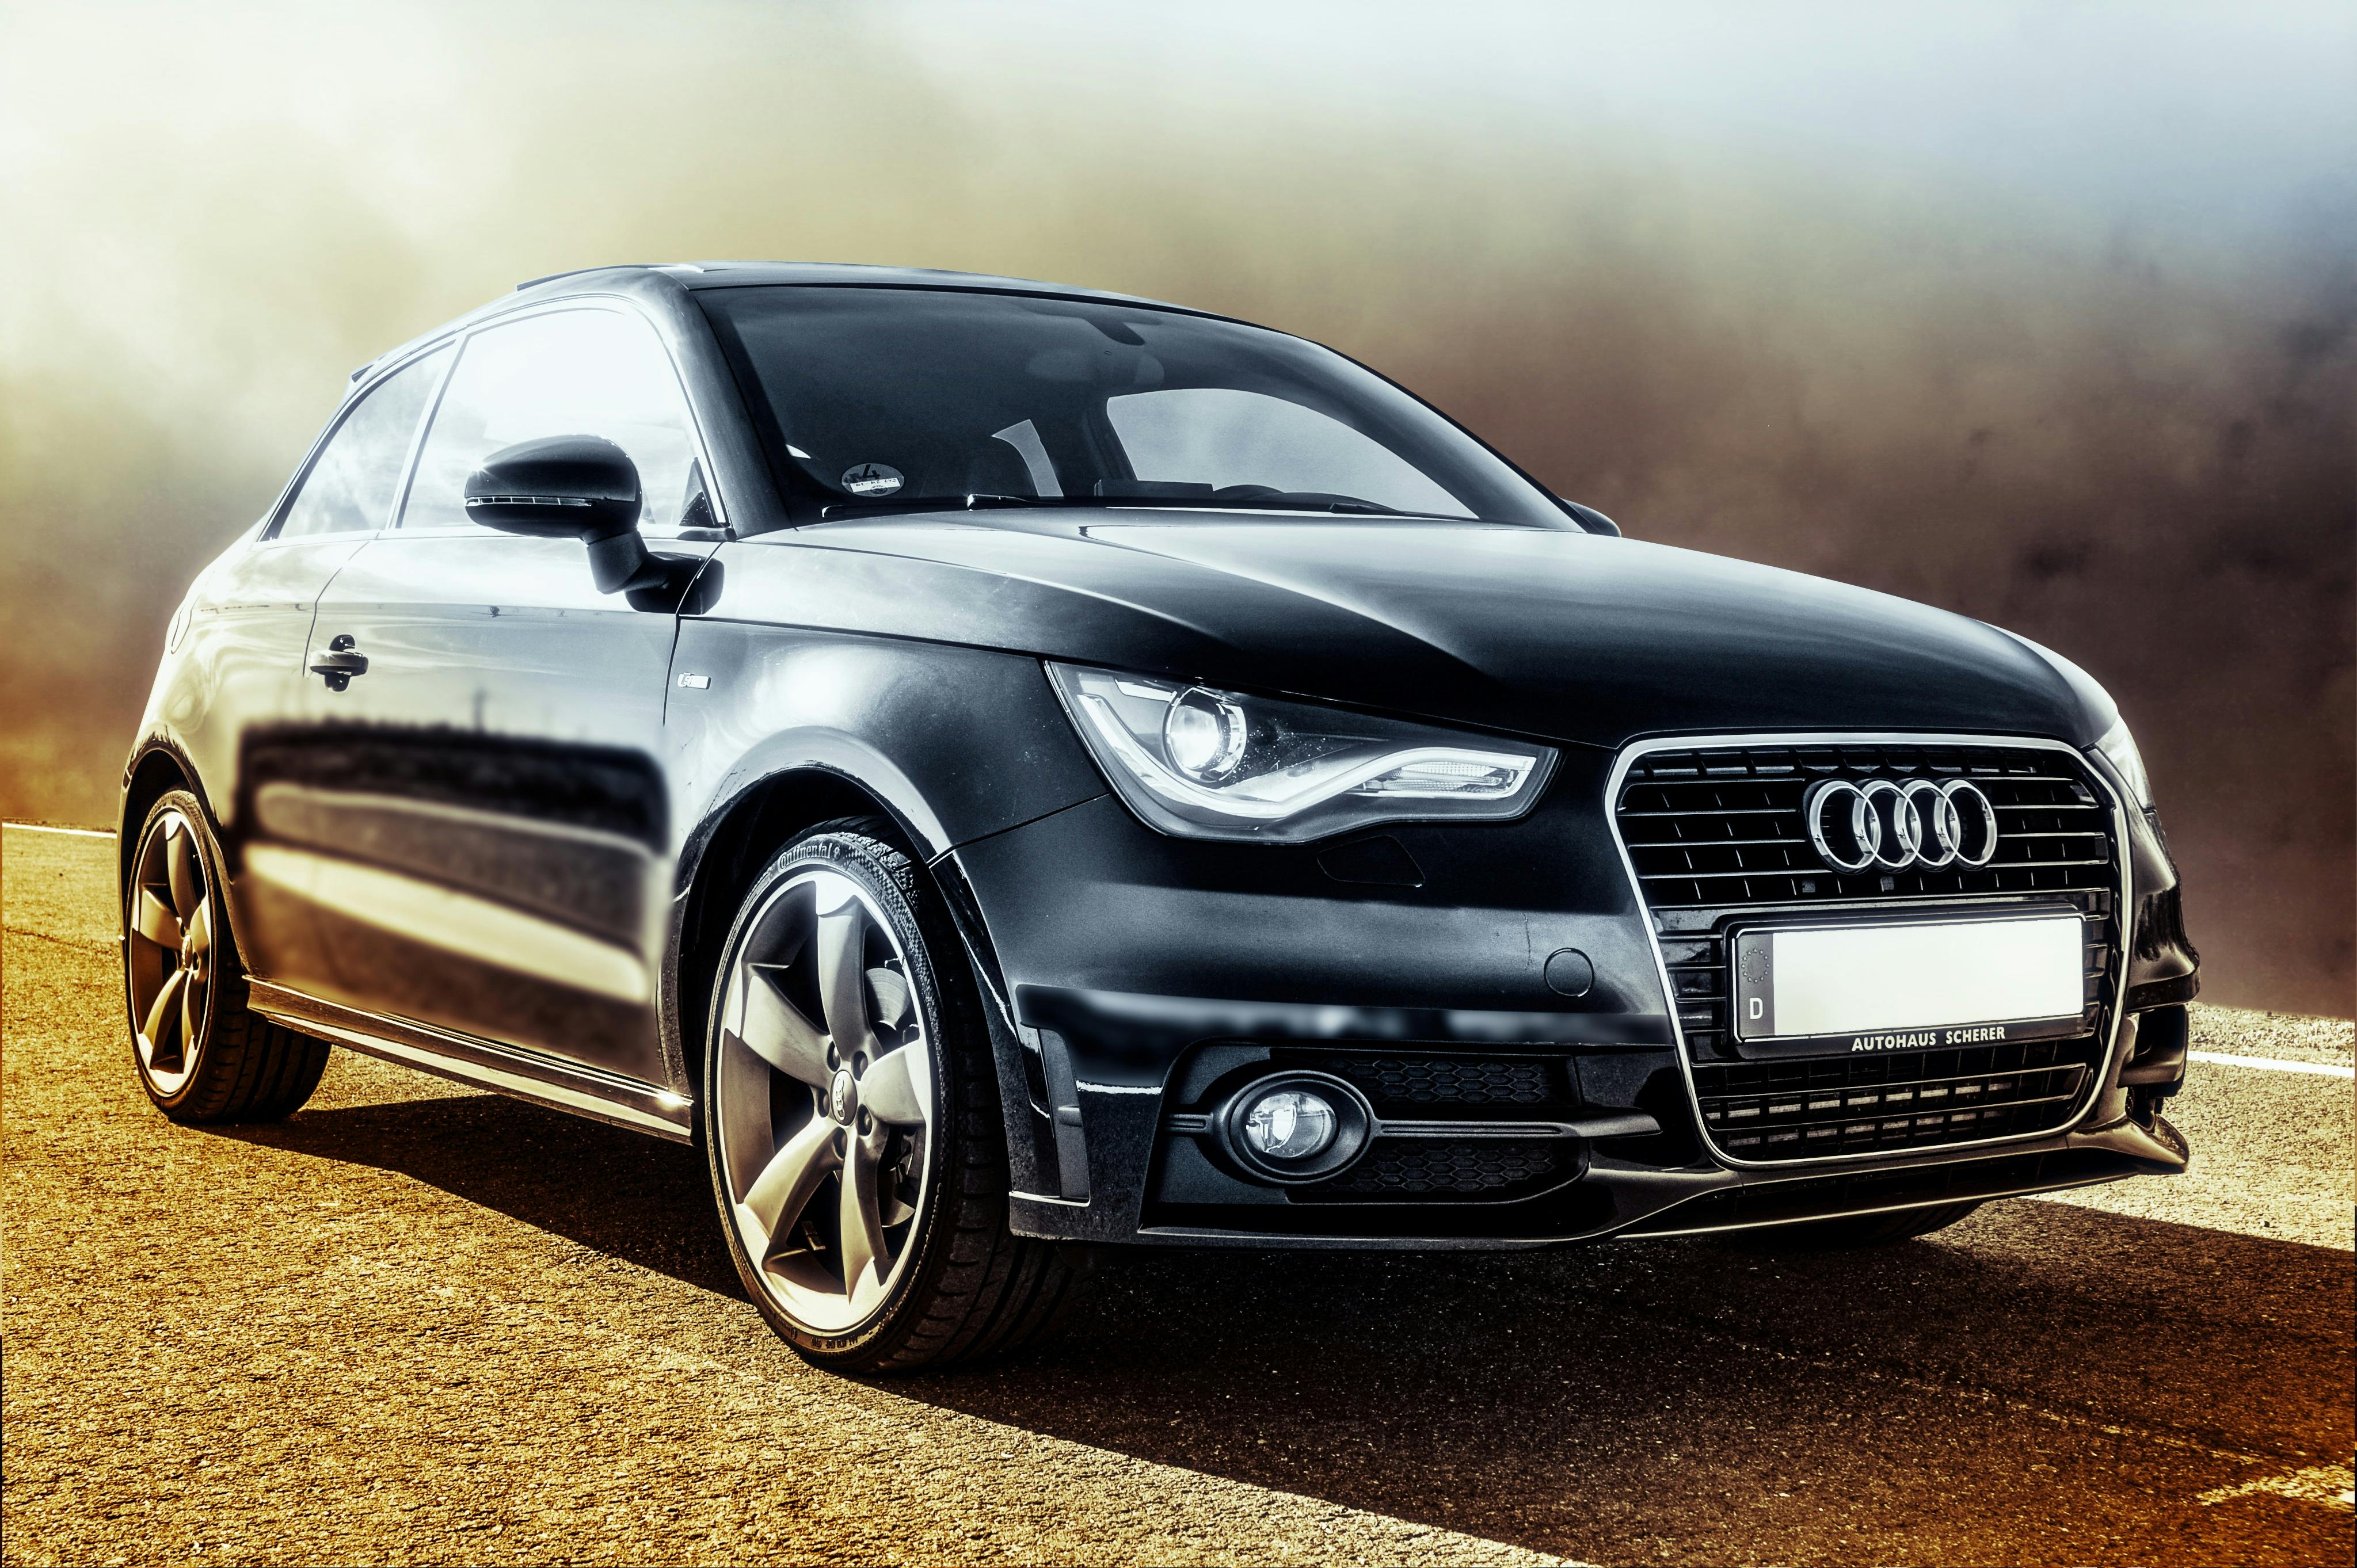 Audi Car Photos, Download The BEST Free Audi Car Stock Photos & HD Images